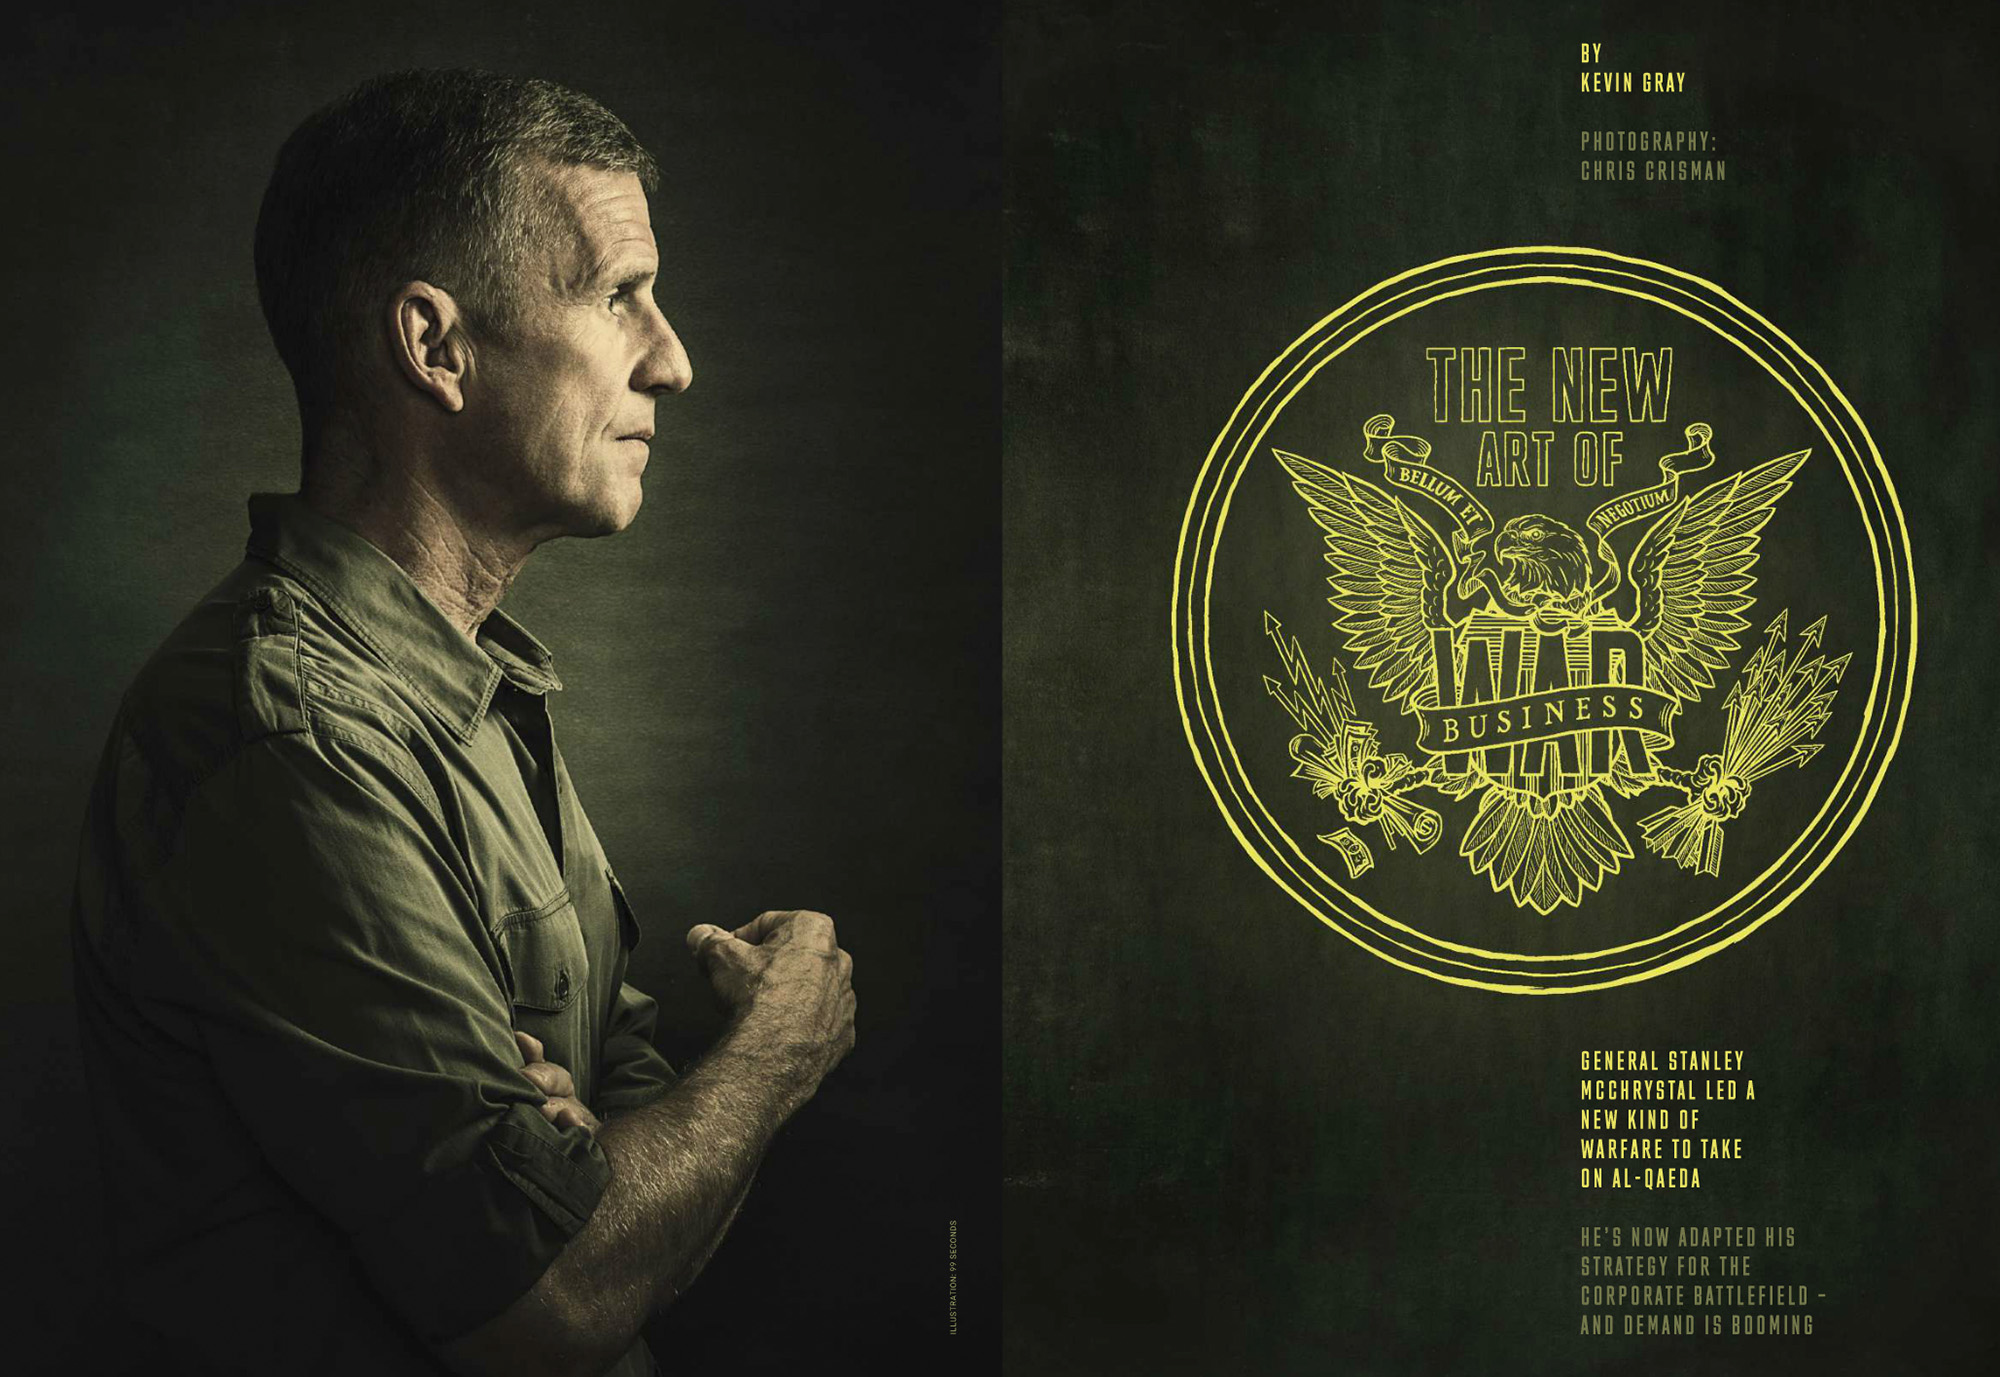 General McChrystal